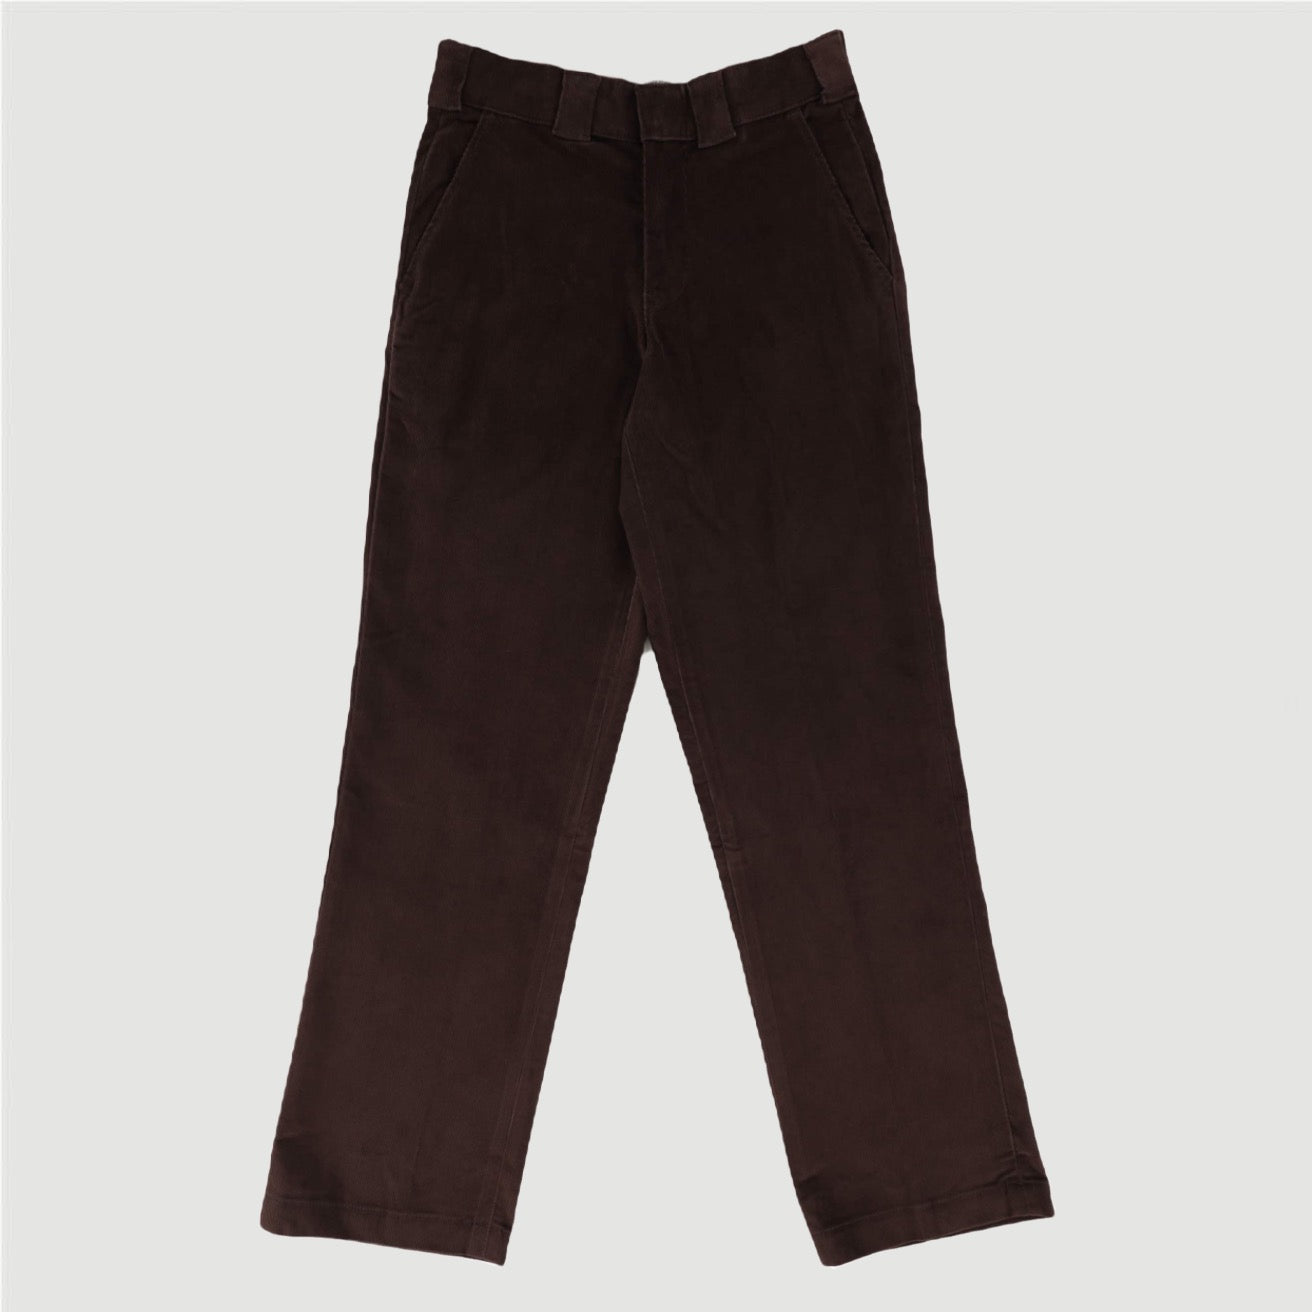 Dickies Regular Fit Flat Front Corduroy Pants Chocolate Brown